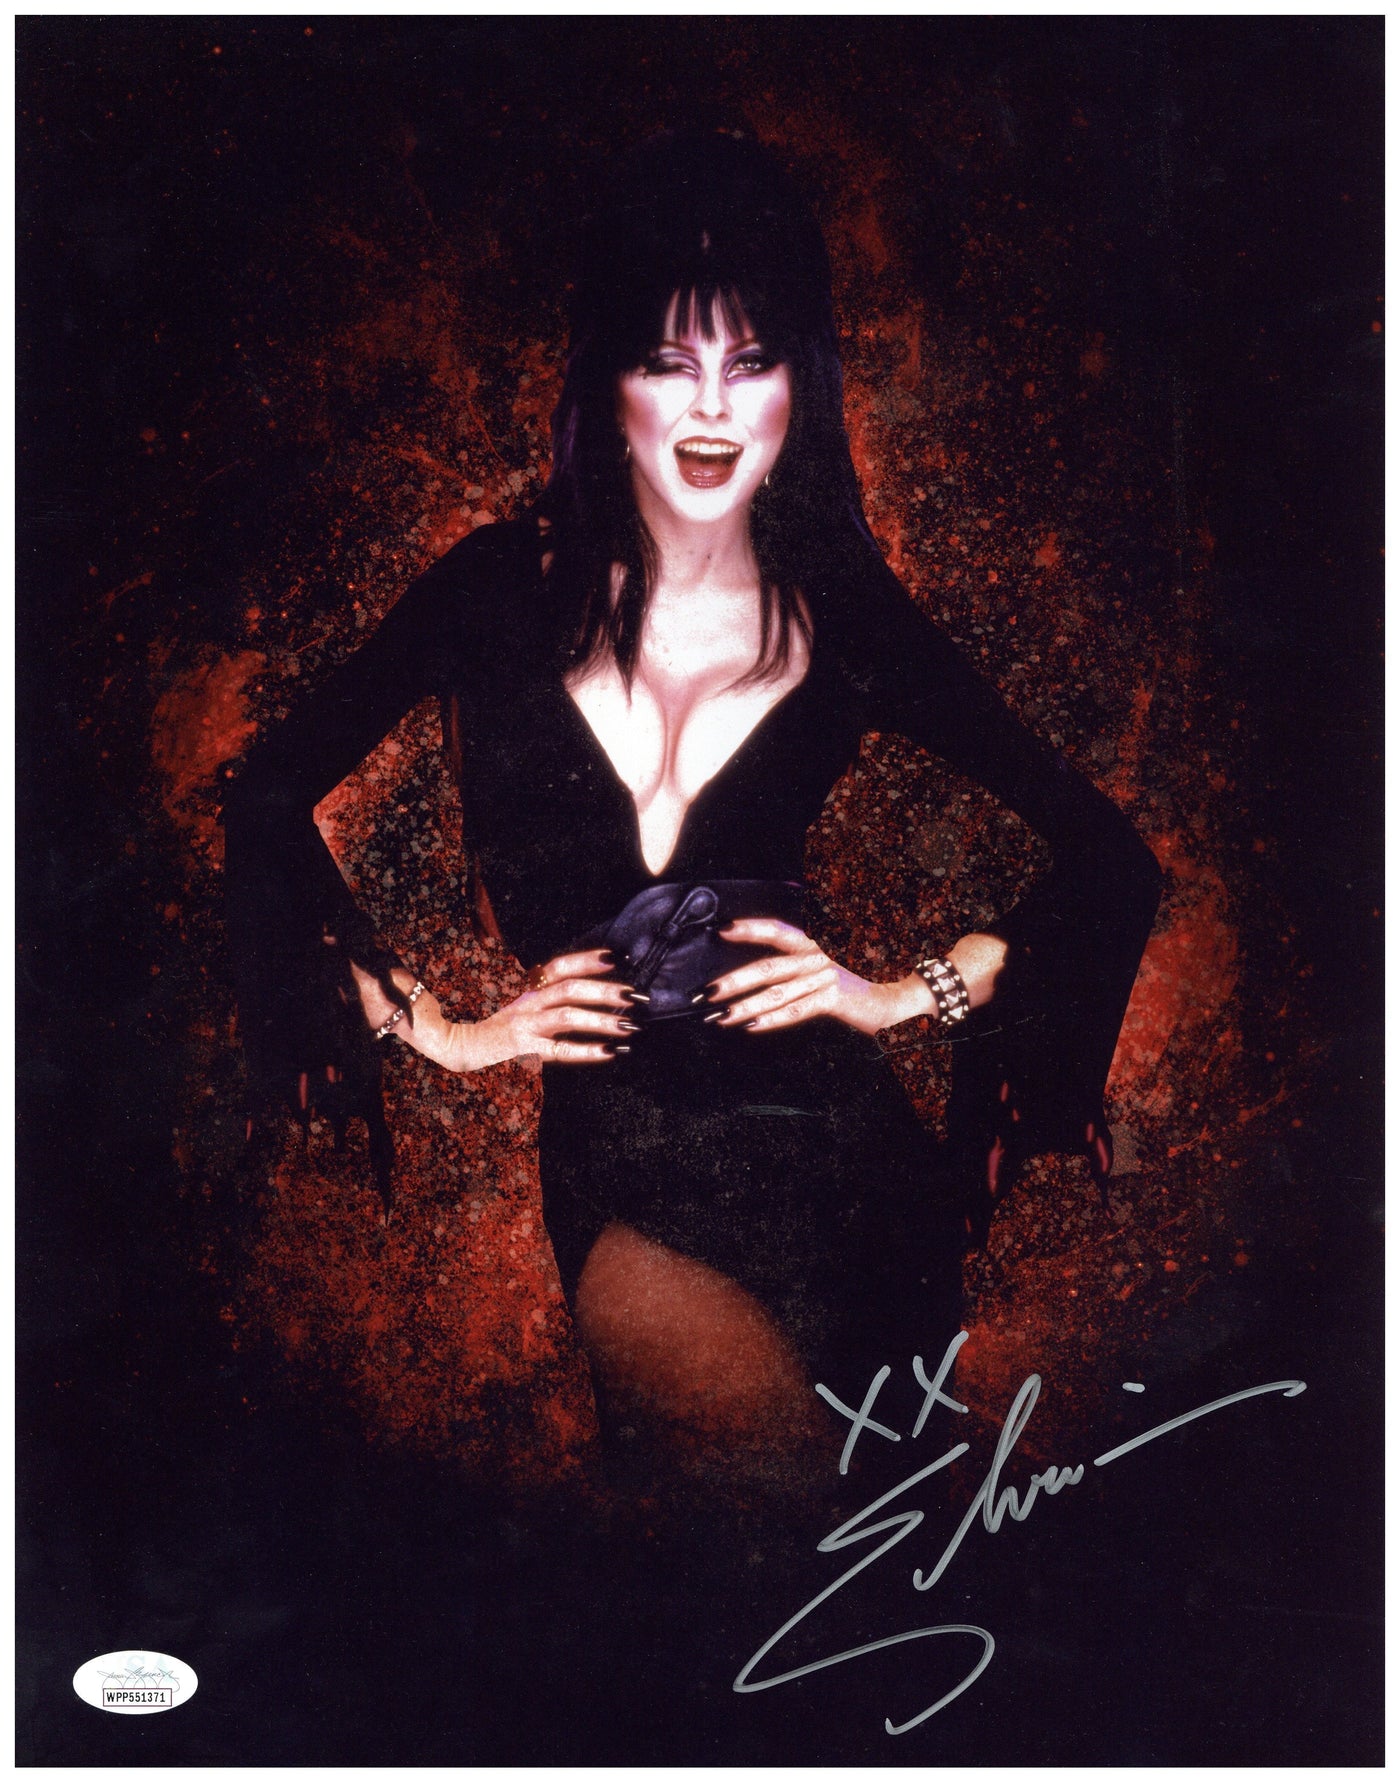 Elvira Signed 11x14 Photo Mistress of the Dark Authentic Autographed JSA COA 5